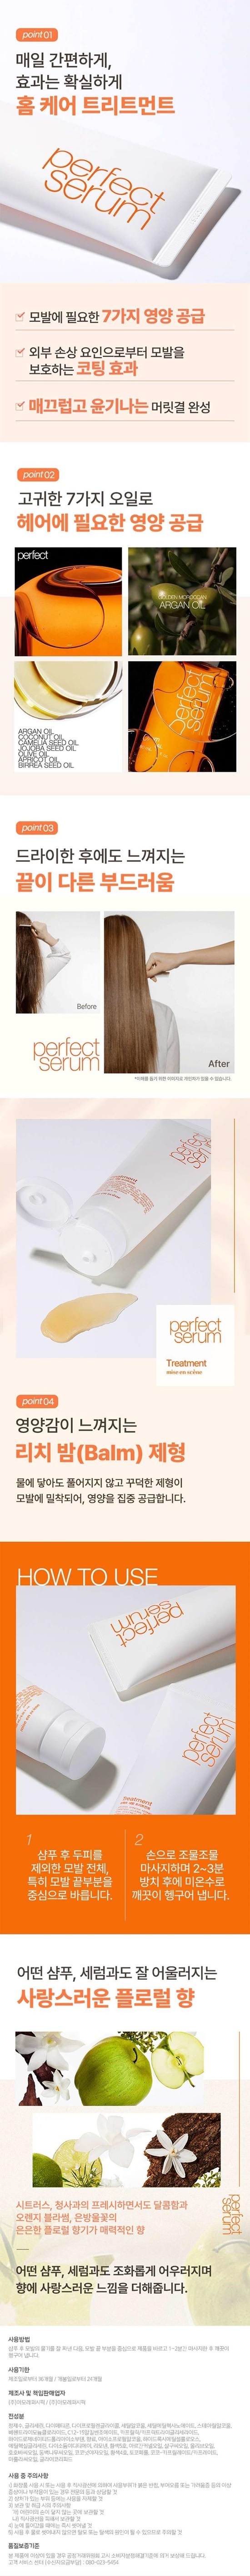 mise-en-scene-perfect-serum-home-treatment-info2.jpg